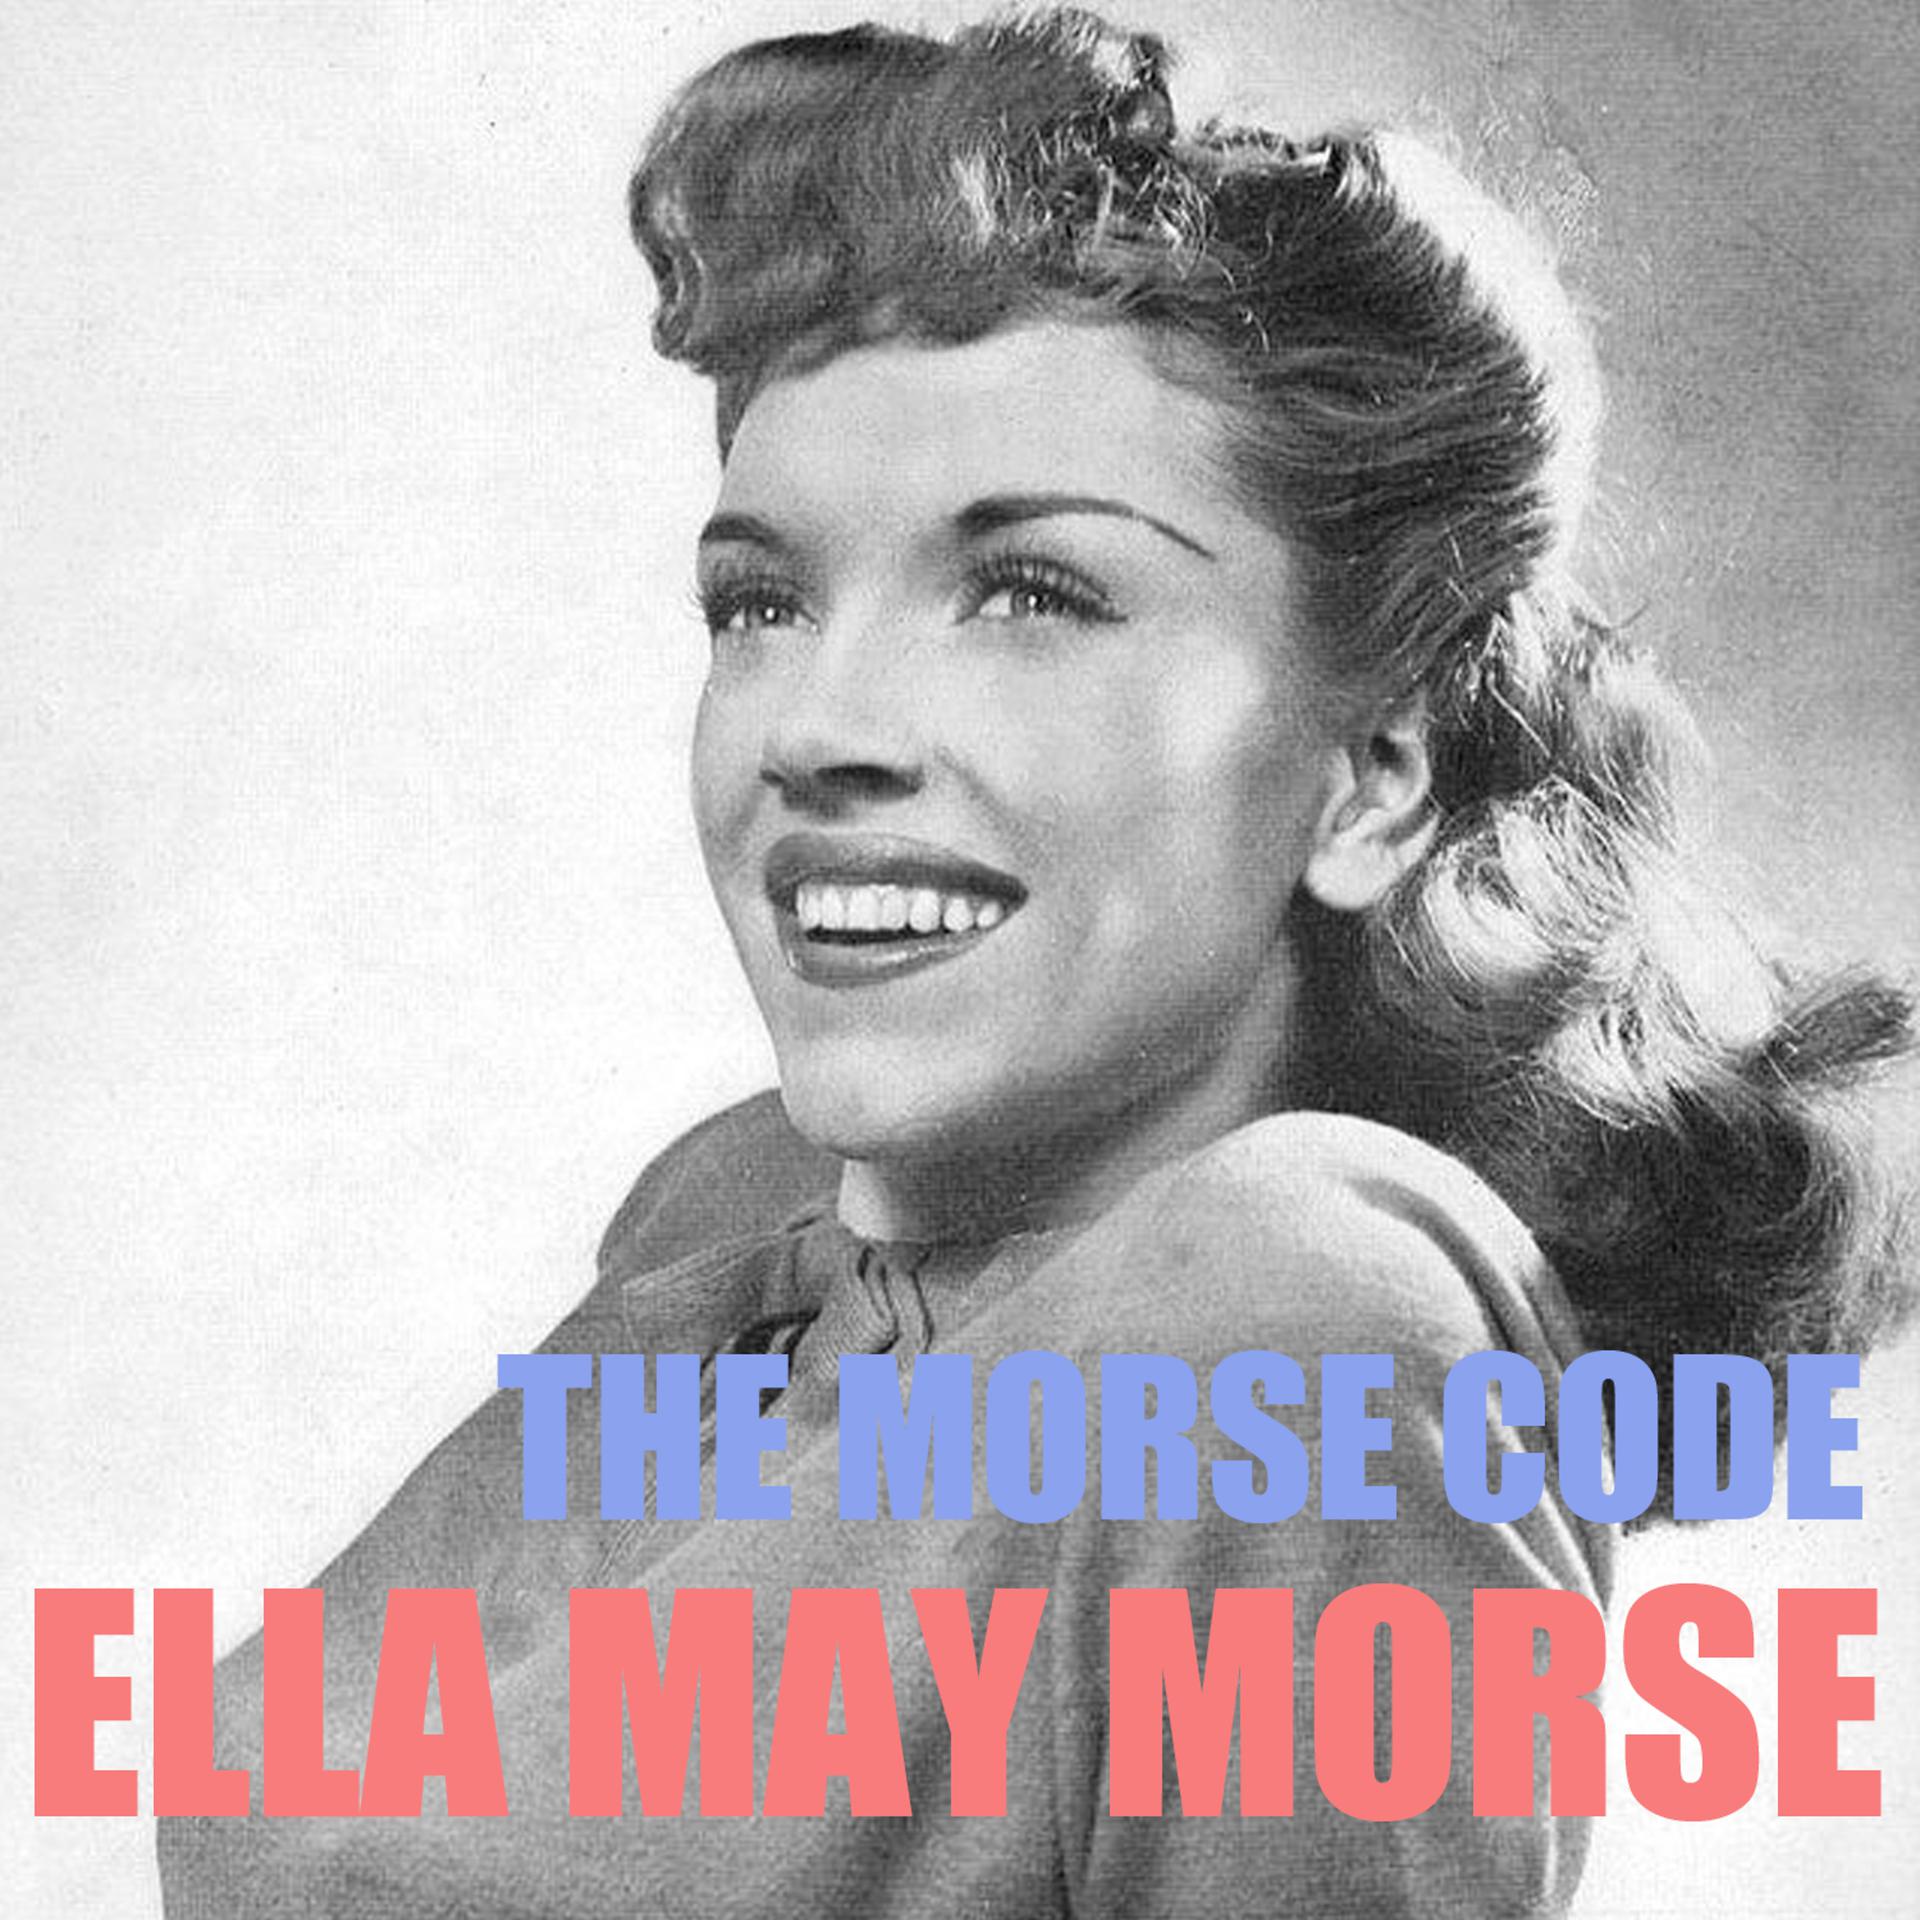 Постер альбома The Morse Code